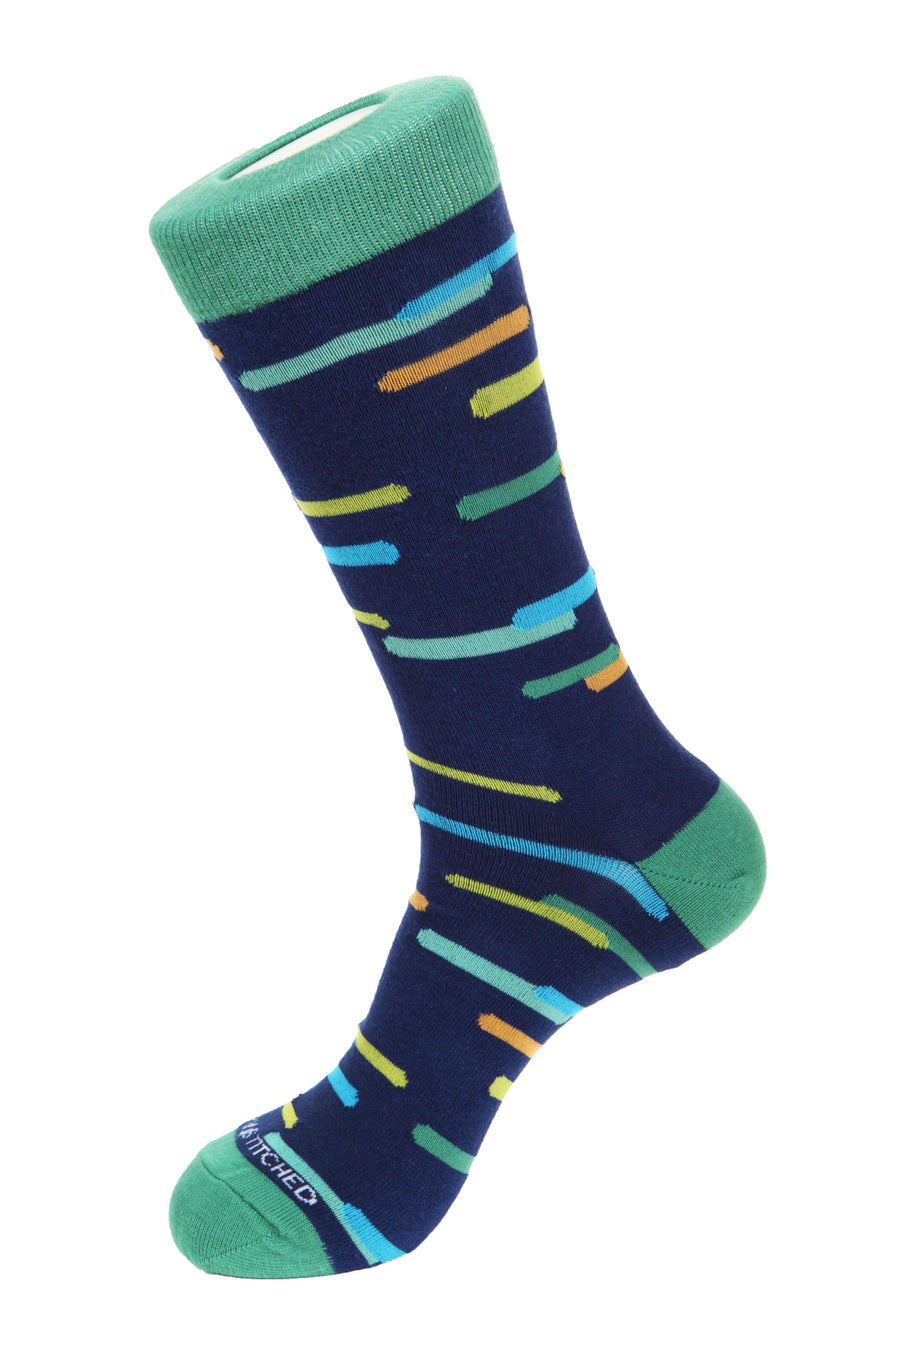 Swell Print Socks